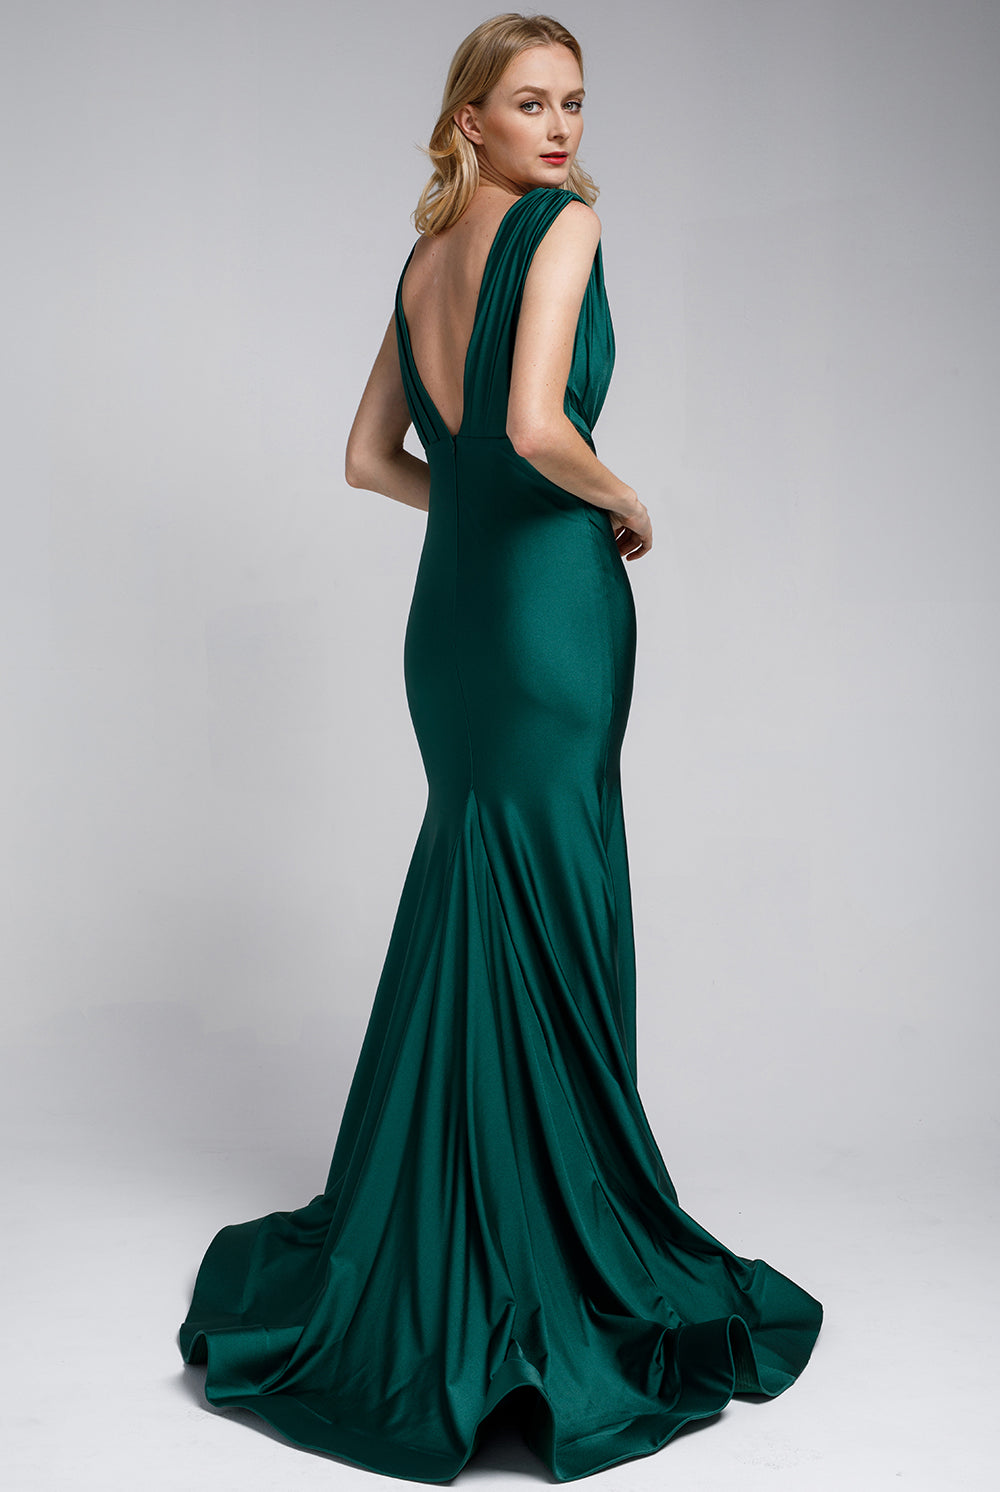 V-Neck Satin Mermaid Long Prom & Bridesmaid Dress AC370-Prom Dress-smcfashion.com